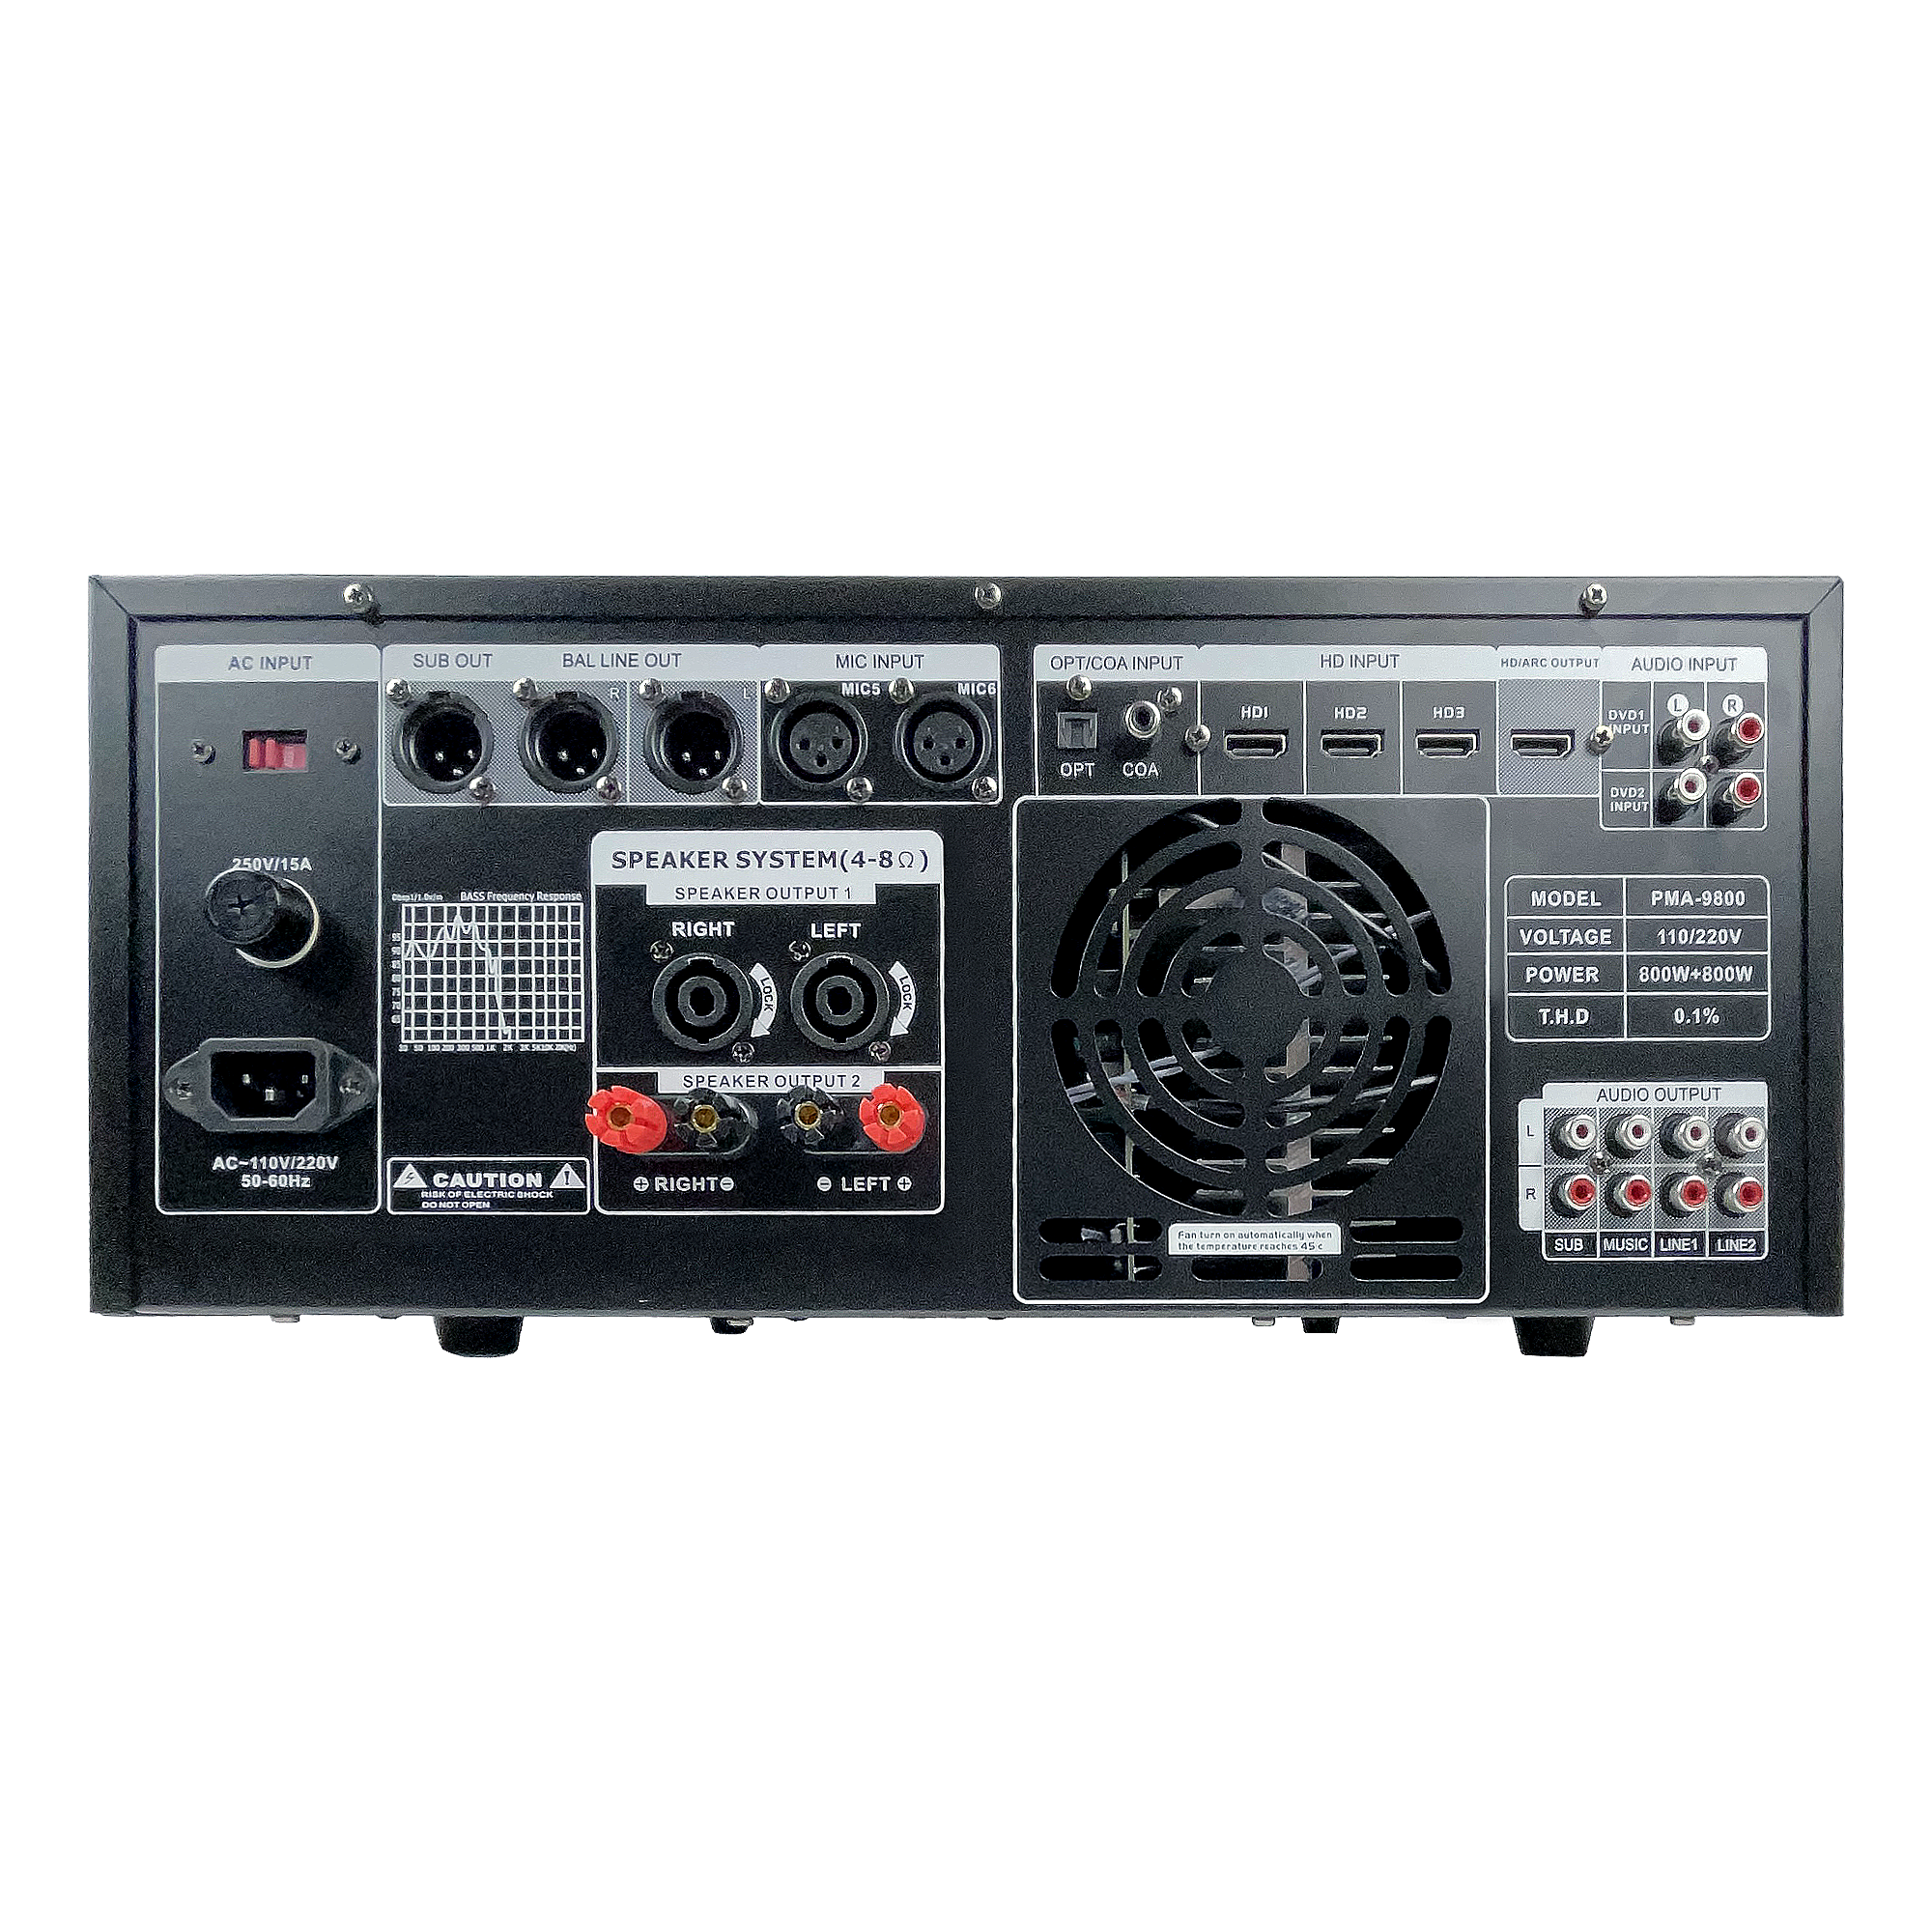 ImPro PMA-9800 Elite Professional 1600W Karaoke Mixing Amplifier for Youtube Smart TV Singing